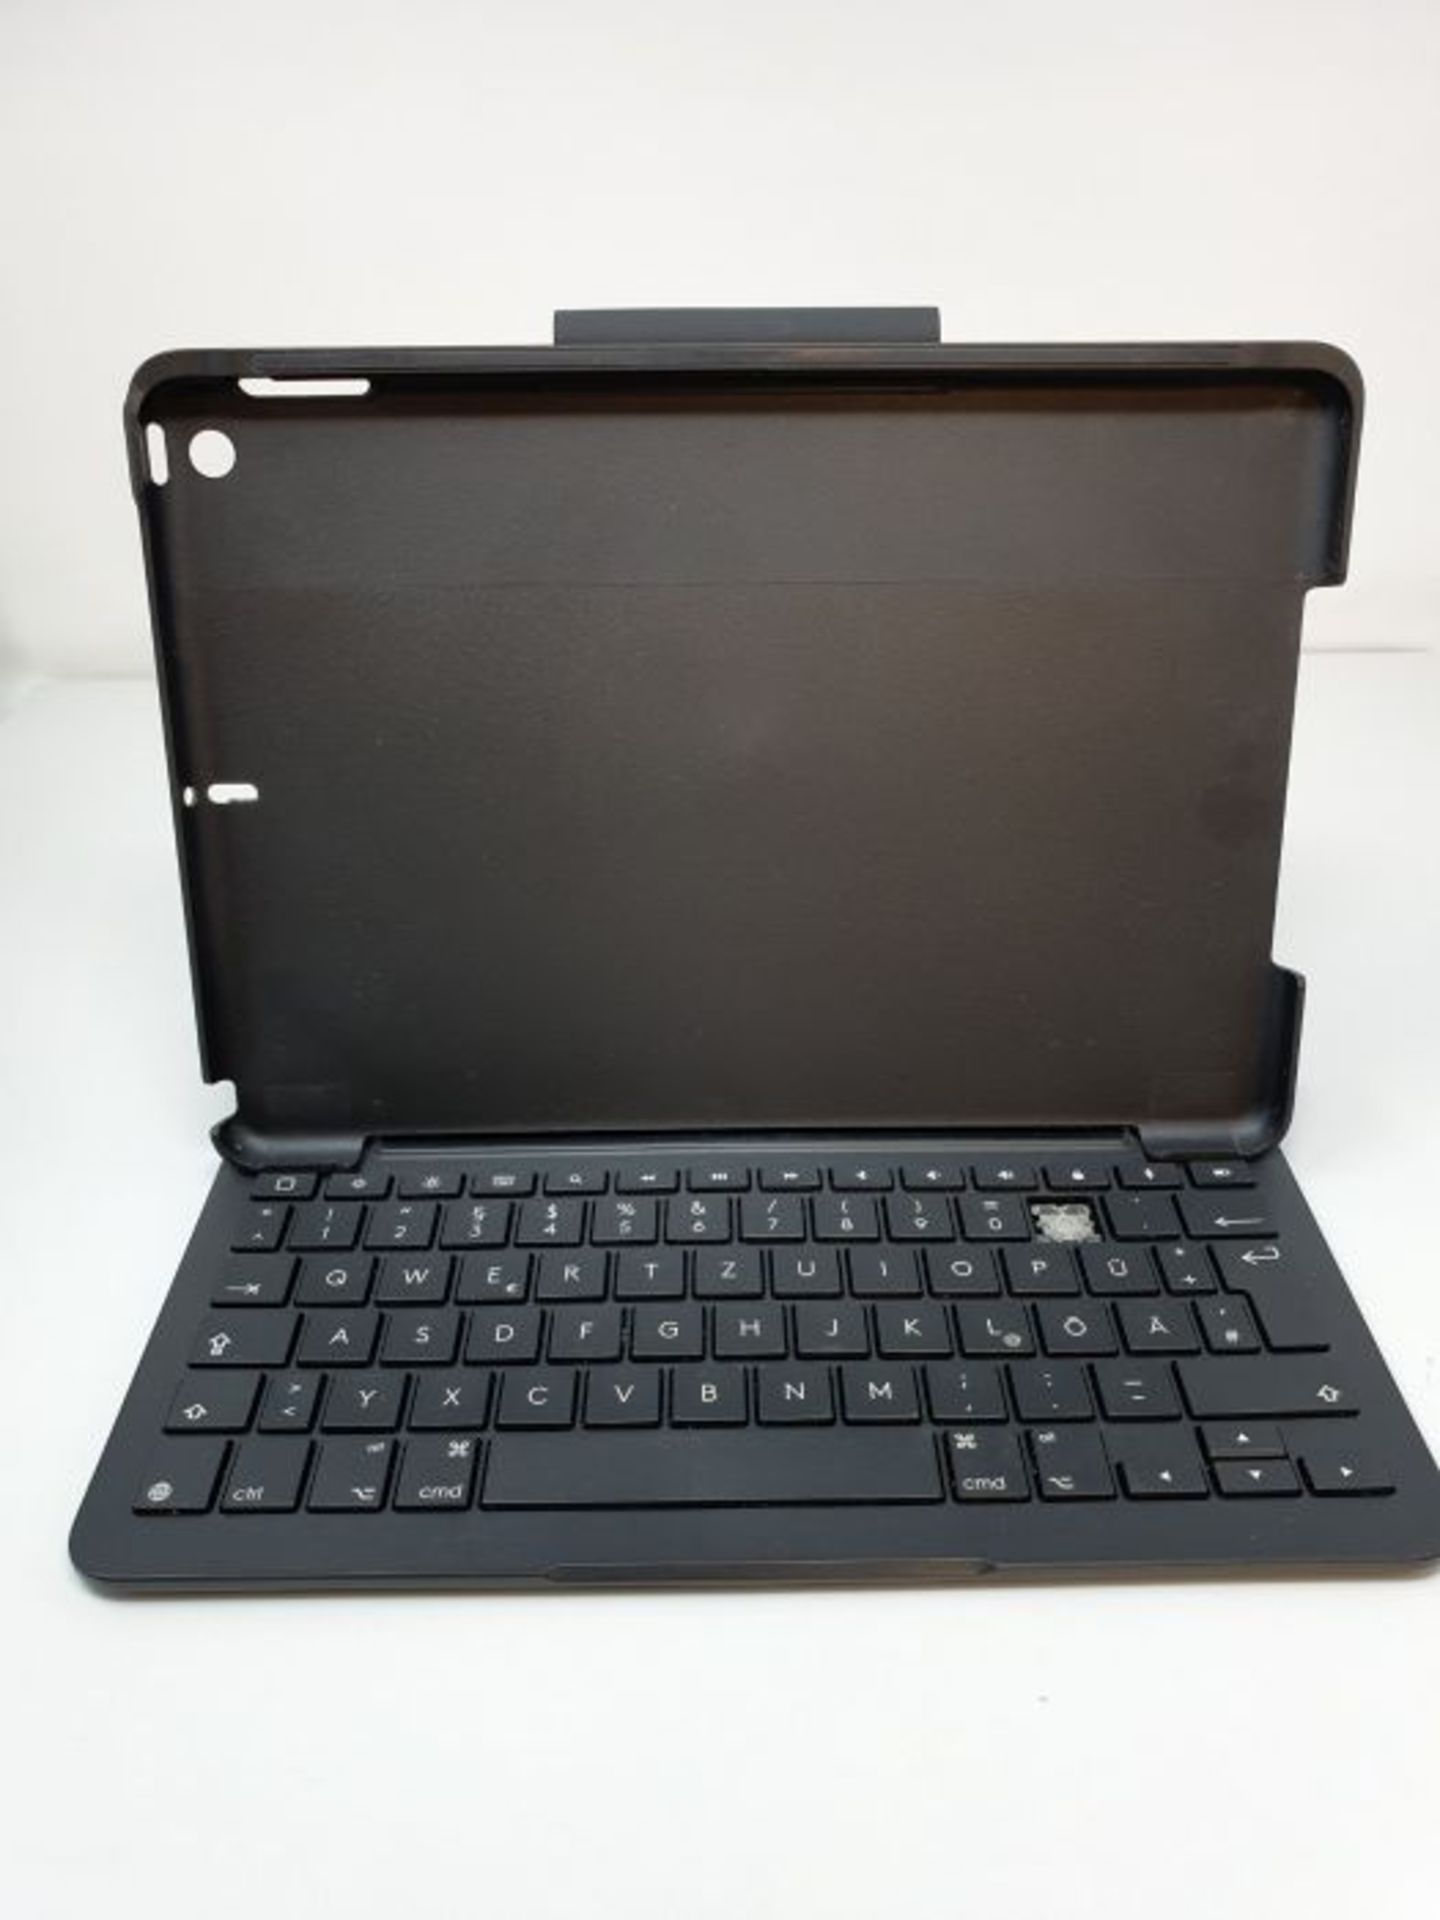 RRP £70.00 Logitech SLIM FOLIO iPad Keyboard Case 10.2 Inch, QWERTZ German Layout - Graphite Blac - Image 3 of 3